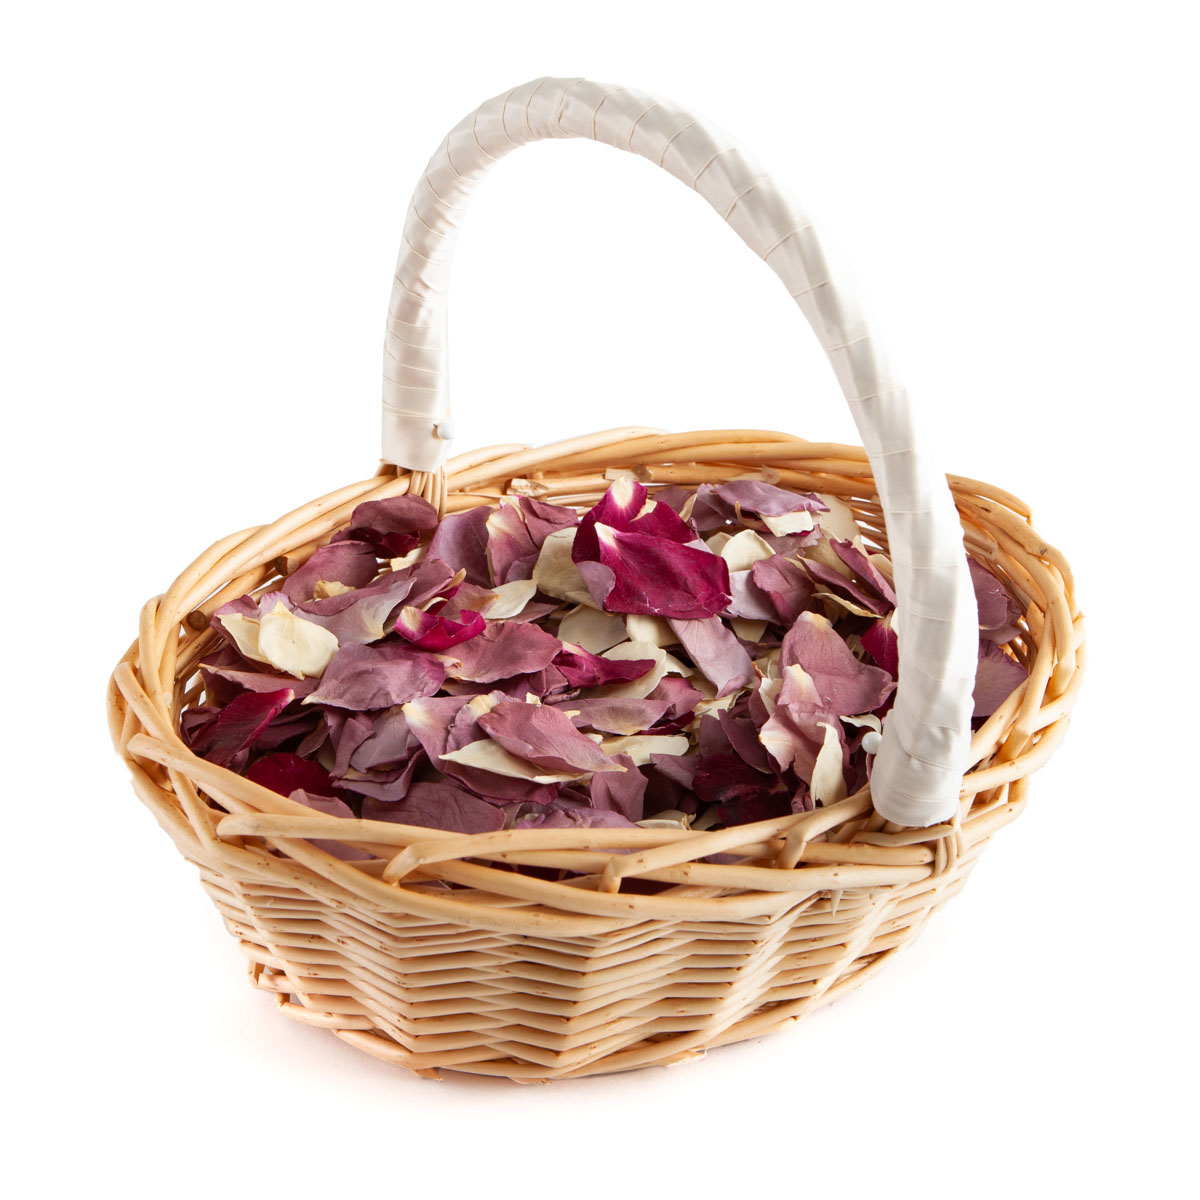 merlot, lilac and cream rose petals